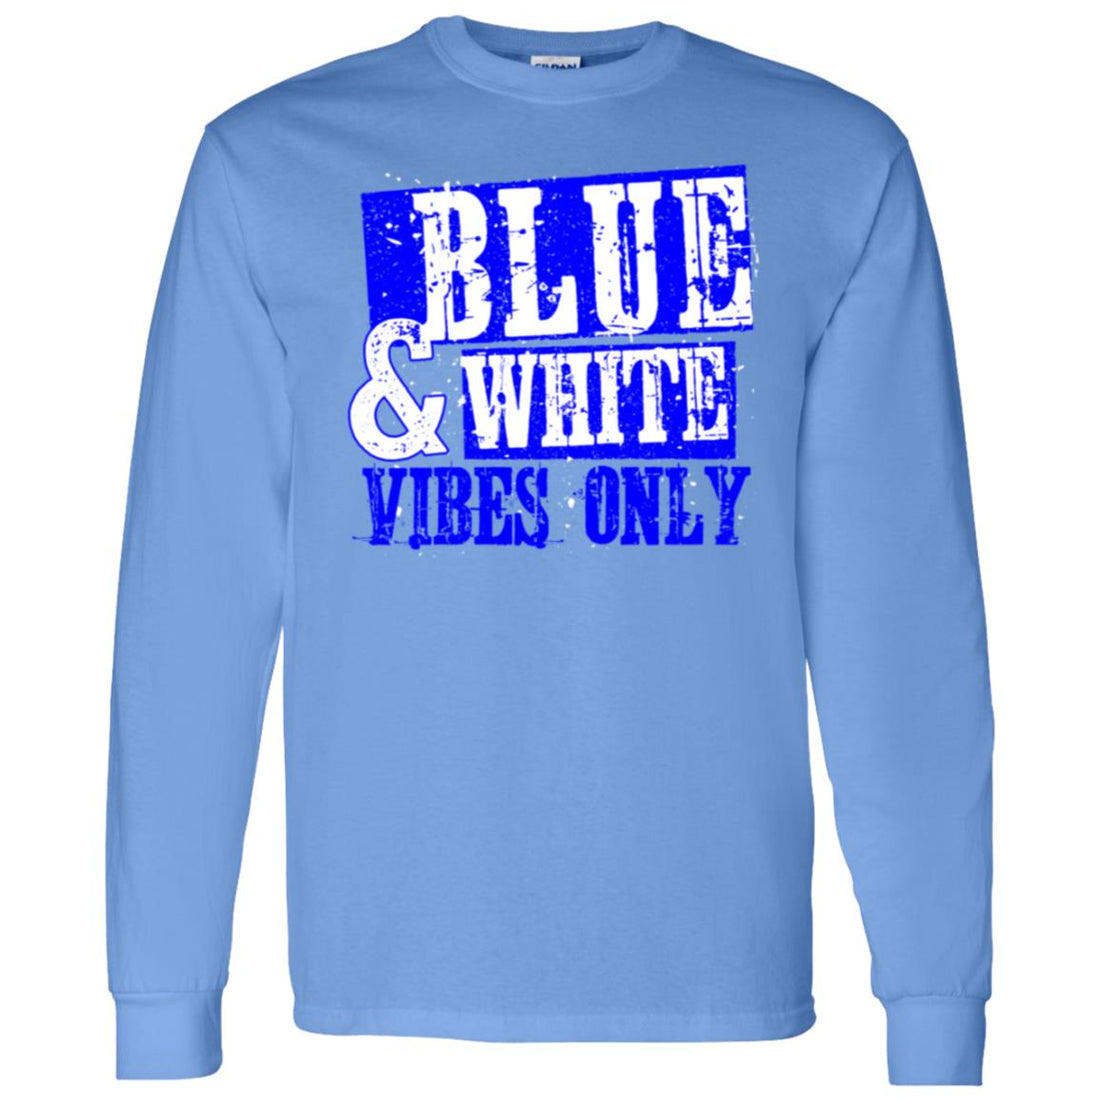 Tigers Blue and White LS T-Shirt 5.3 oz. - T-Shirts - Positively Sassy - Tigers Blue and White LS T-Shirt 5.3 oz.